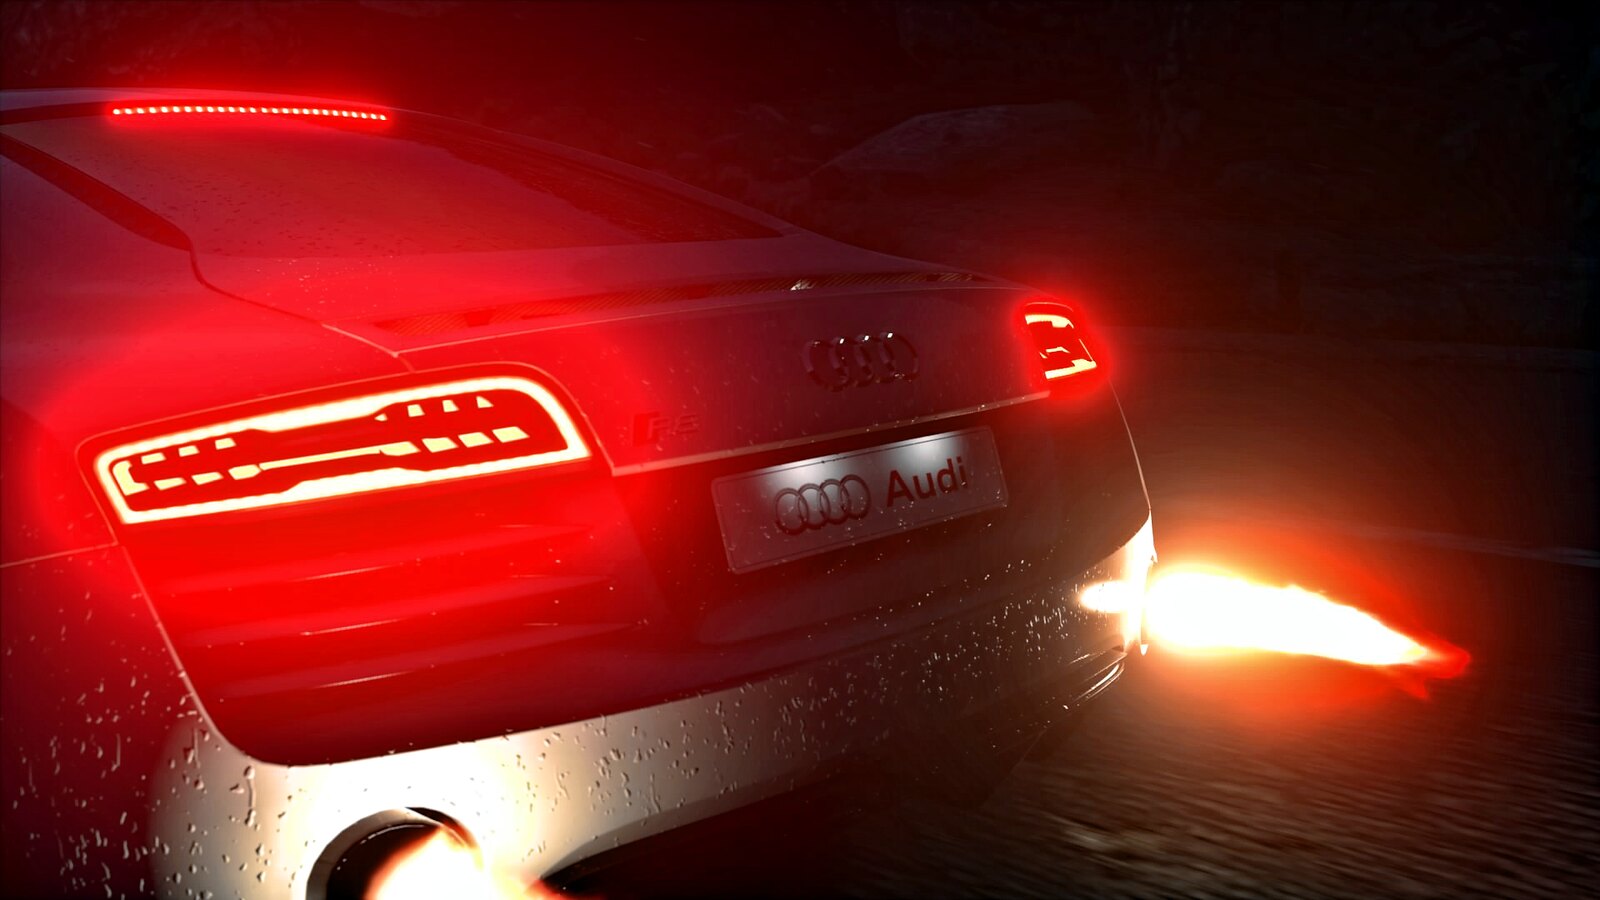 Audi R8 on fire